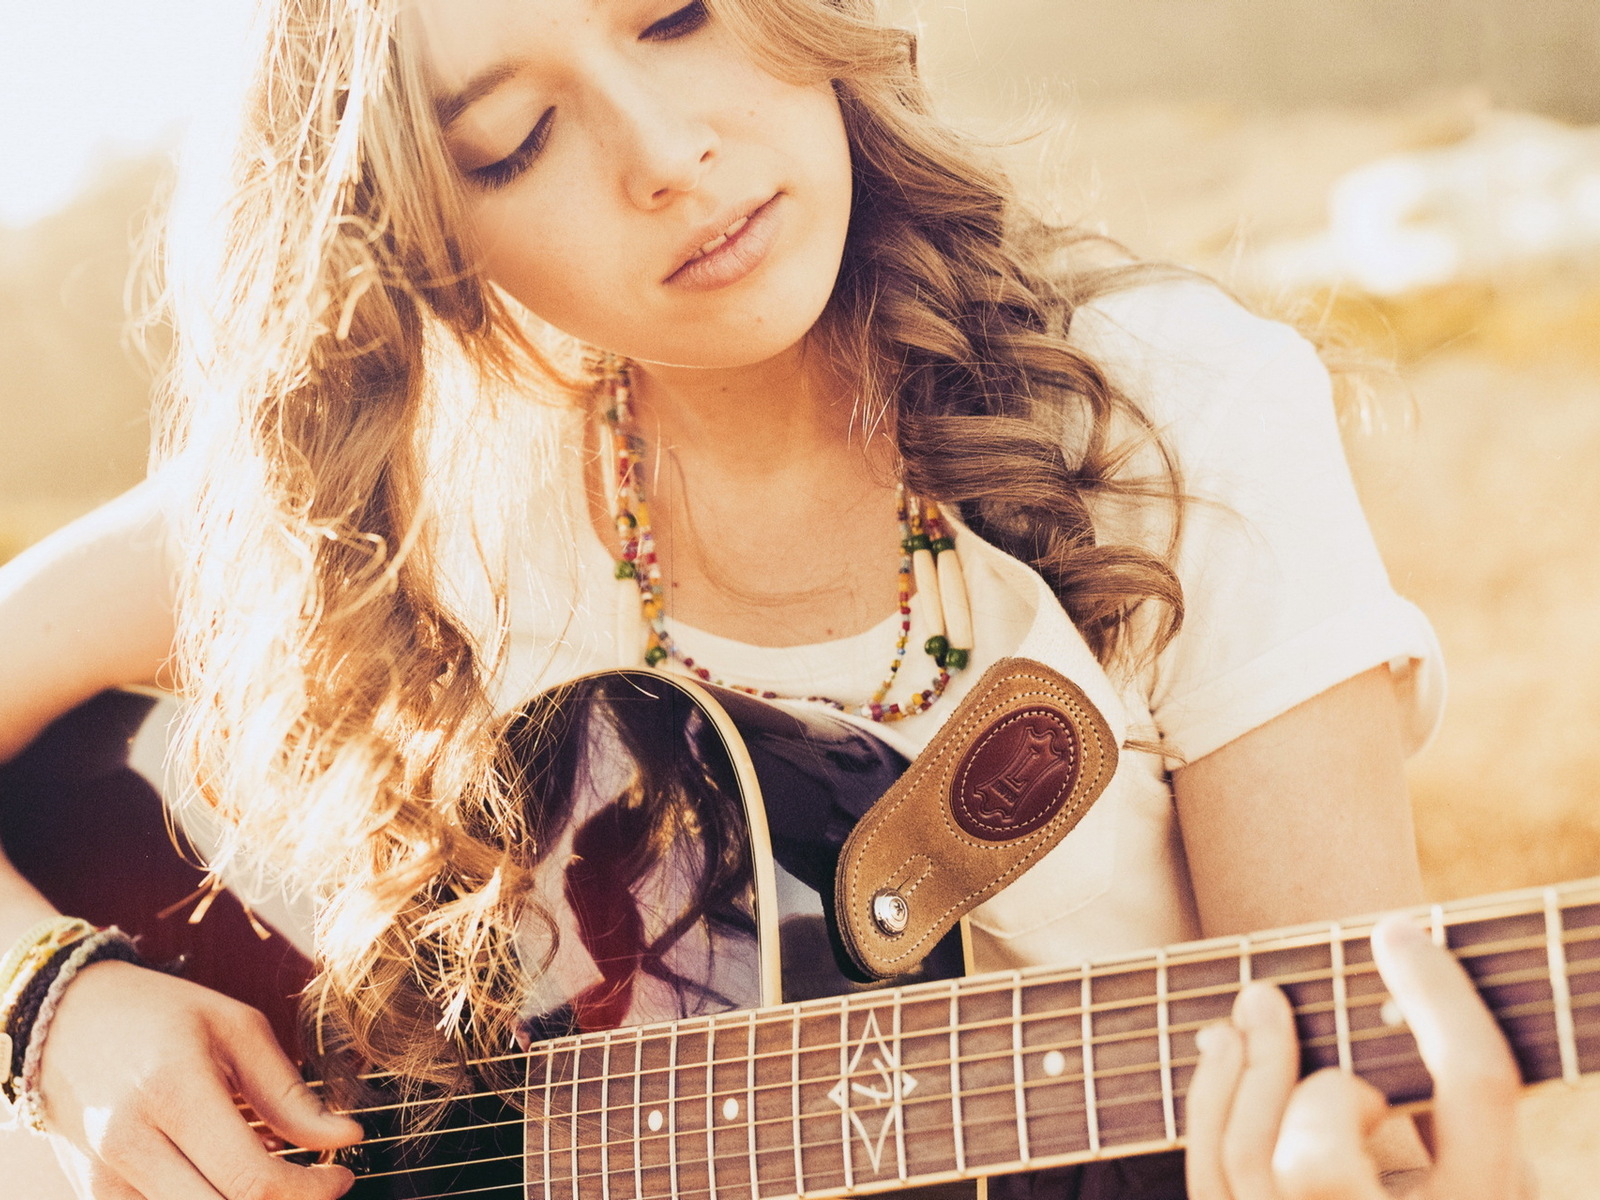 guitar girl wallpaper,guitar,string instrument,musical instrument,plucked string instruments,guitarist